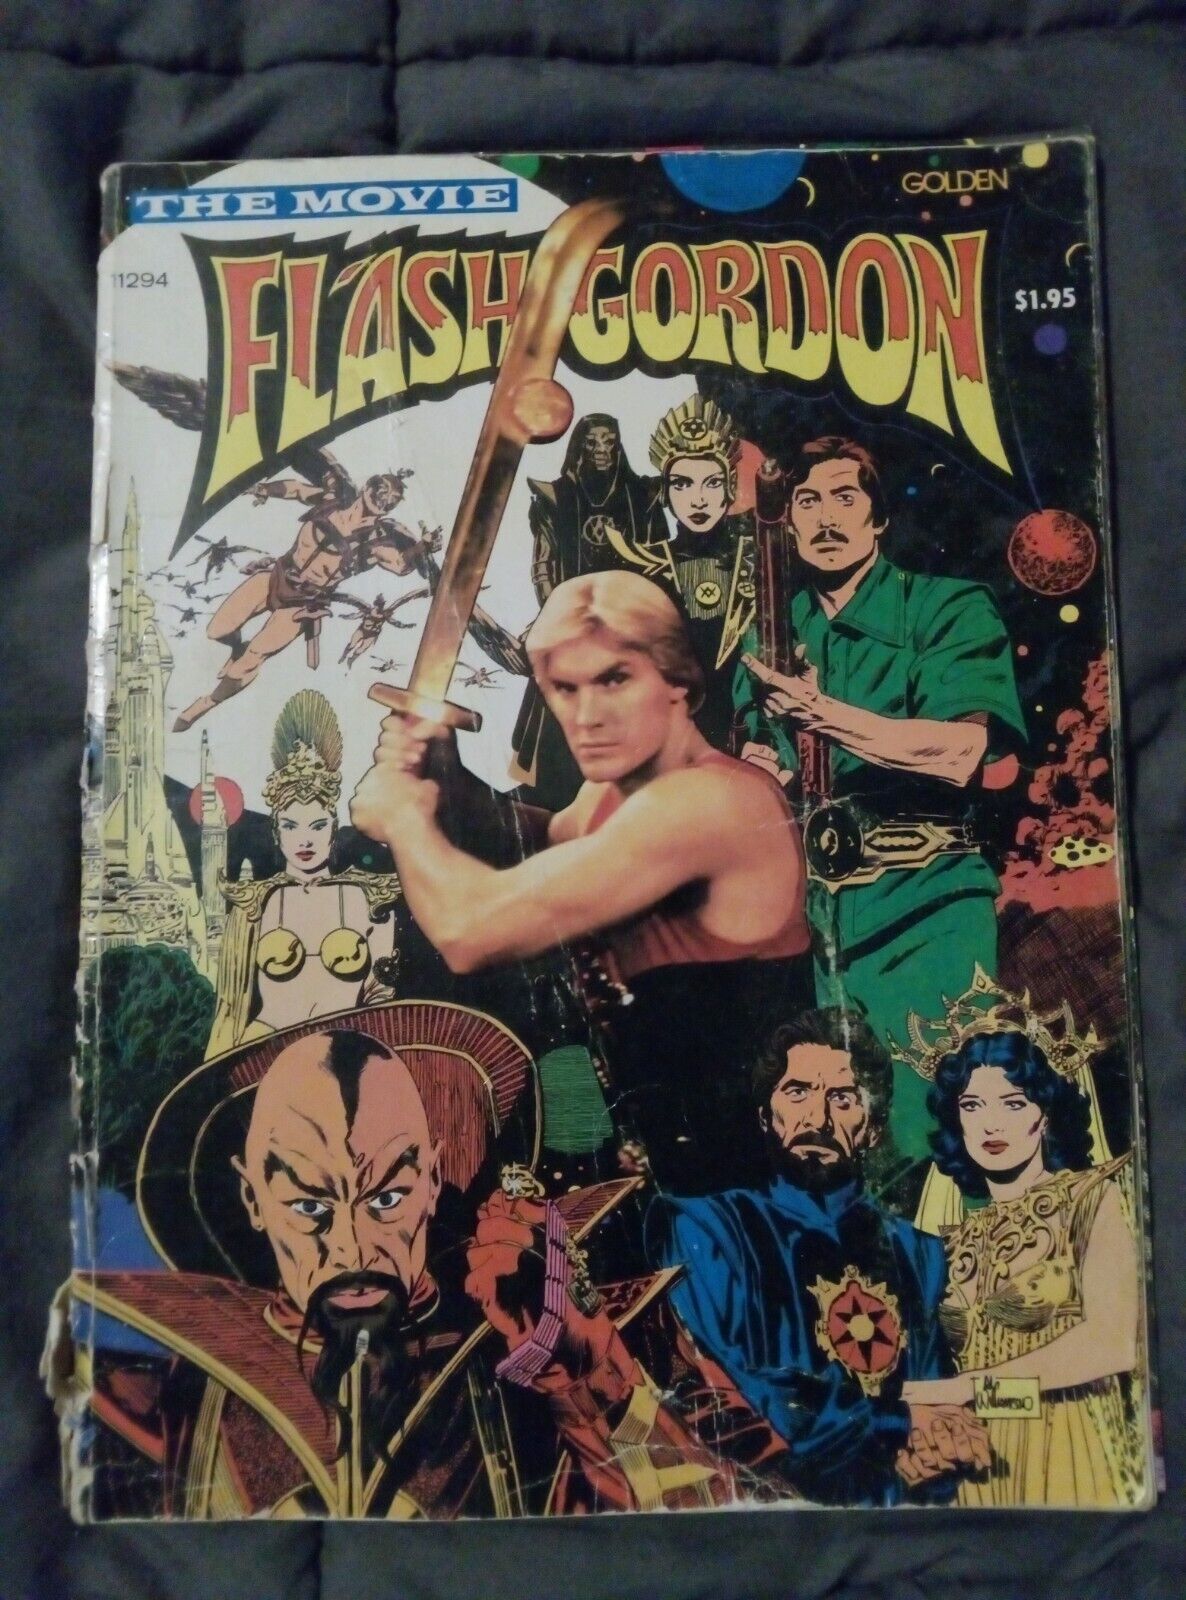 Flash Gordon the Movie #11294 (Paperback 1980)